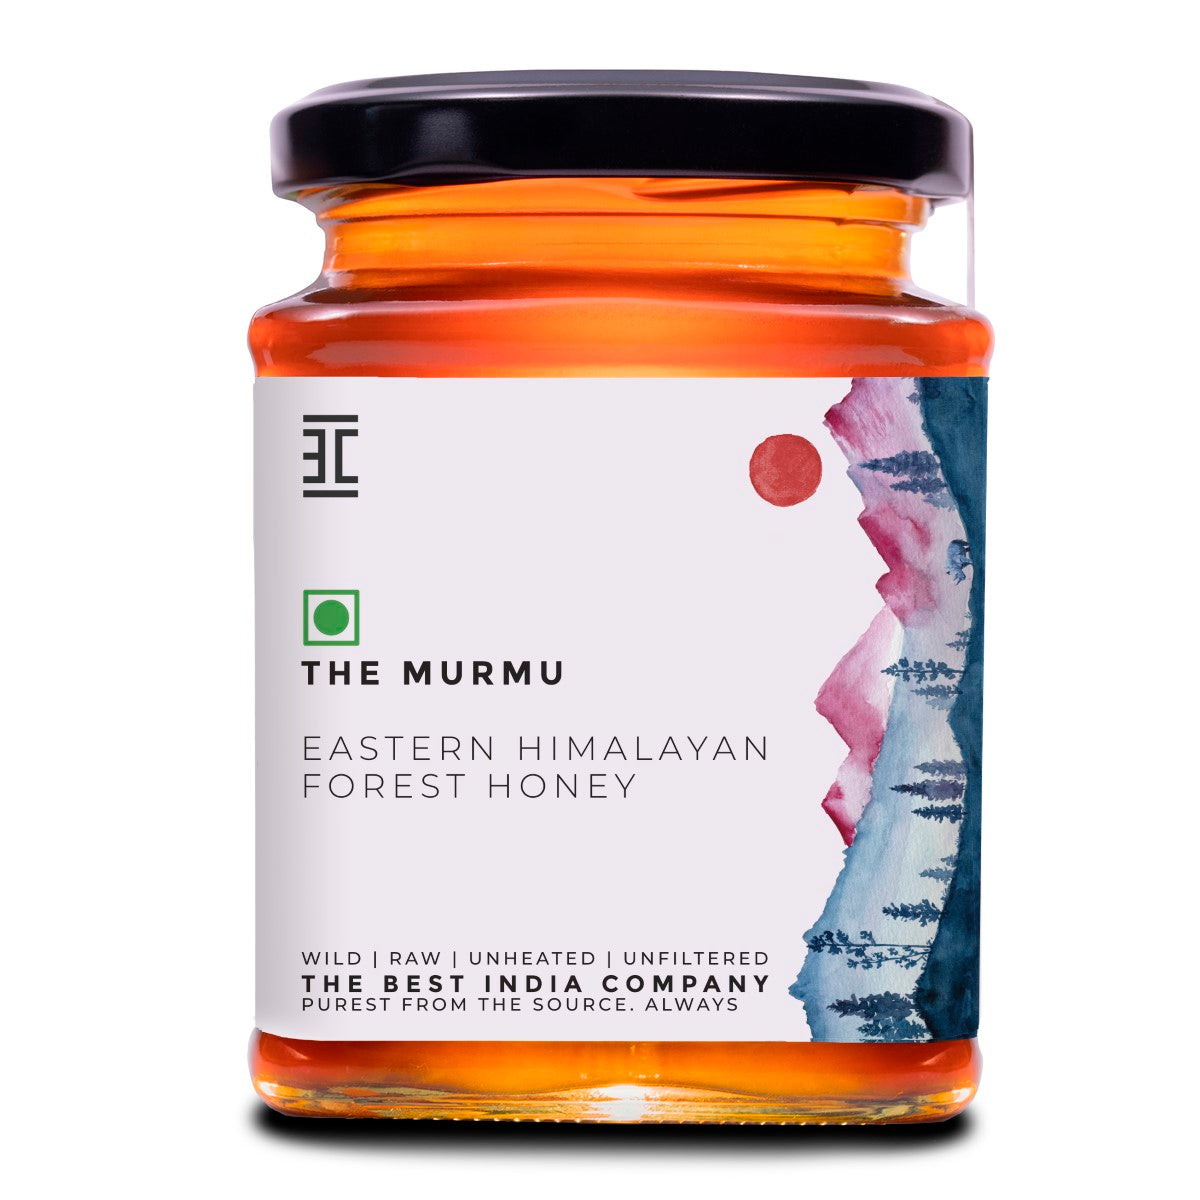 The Murmu Eastern Himalayan Forest Honey